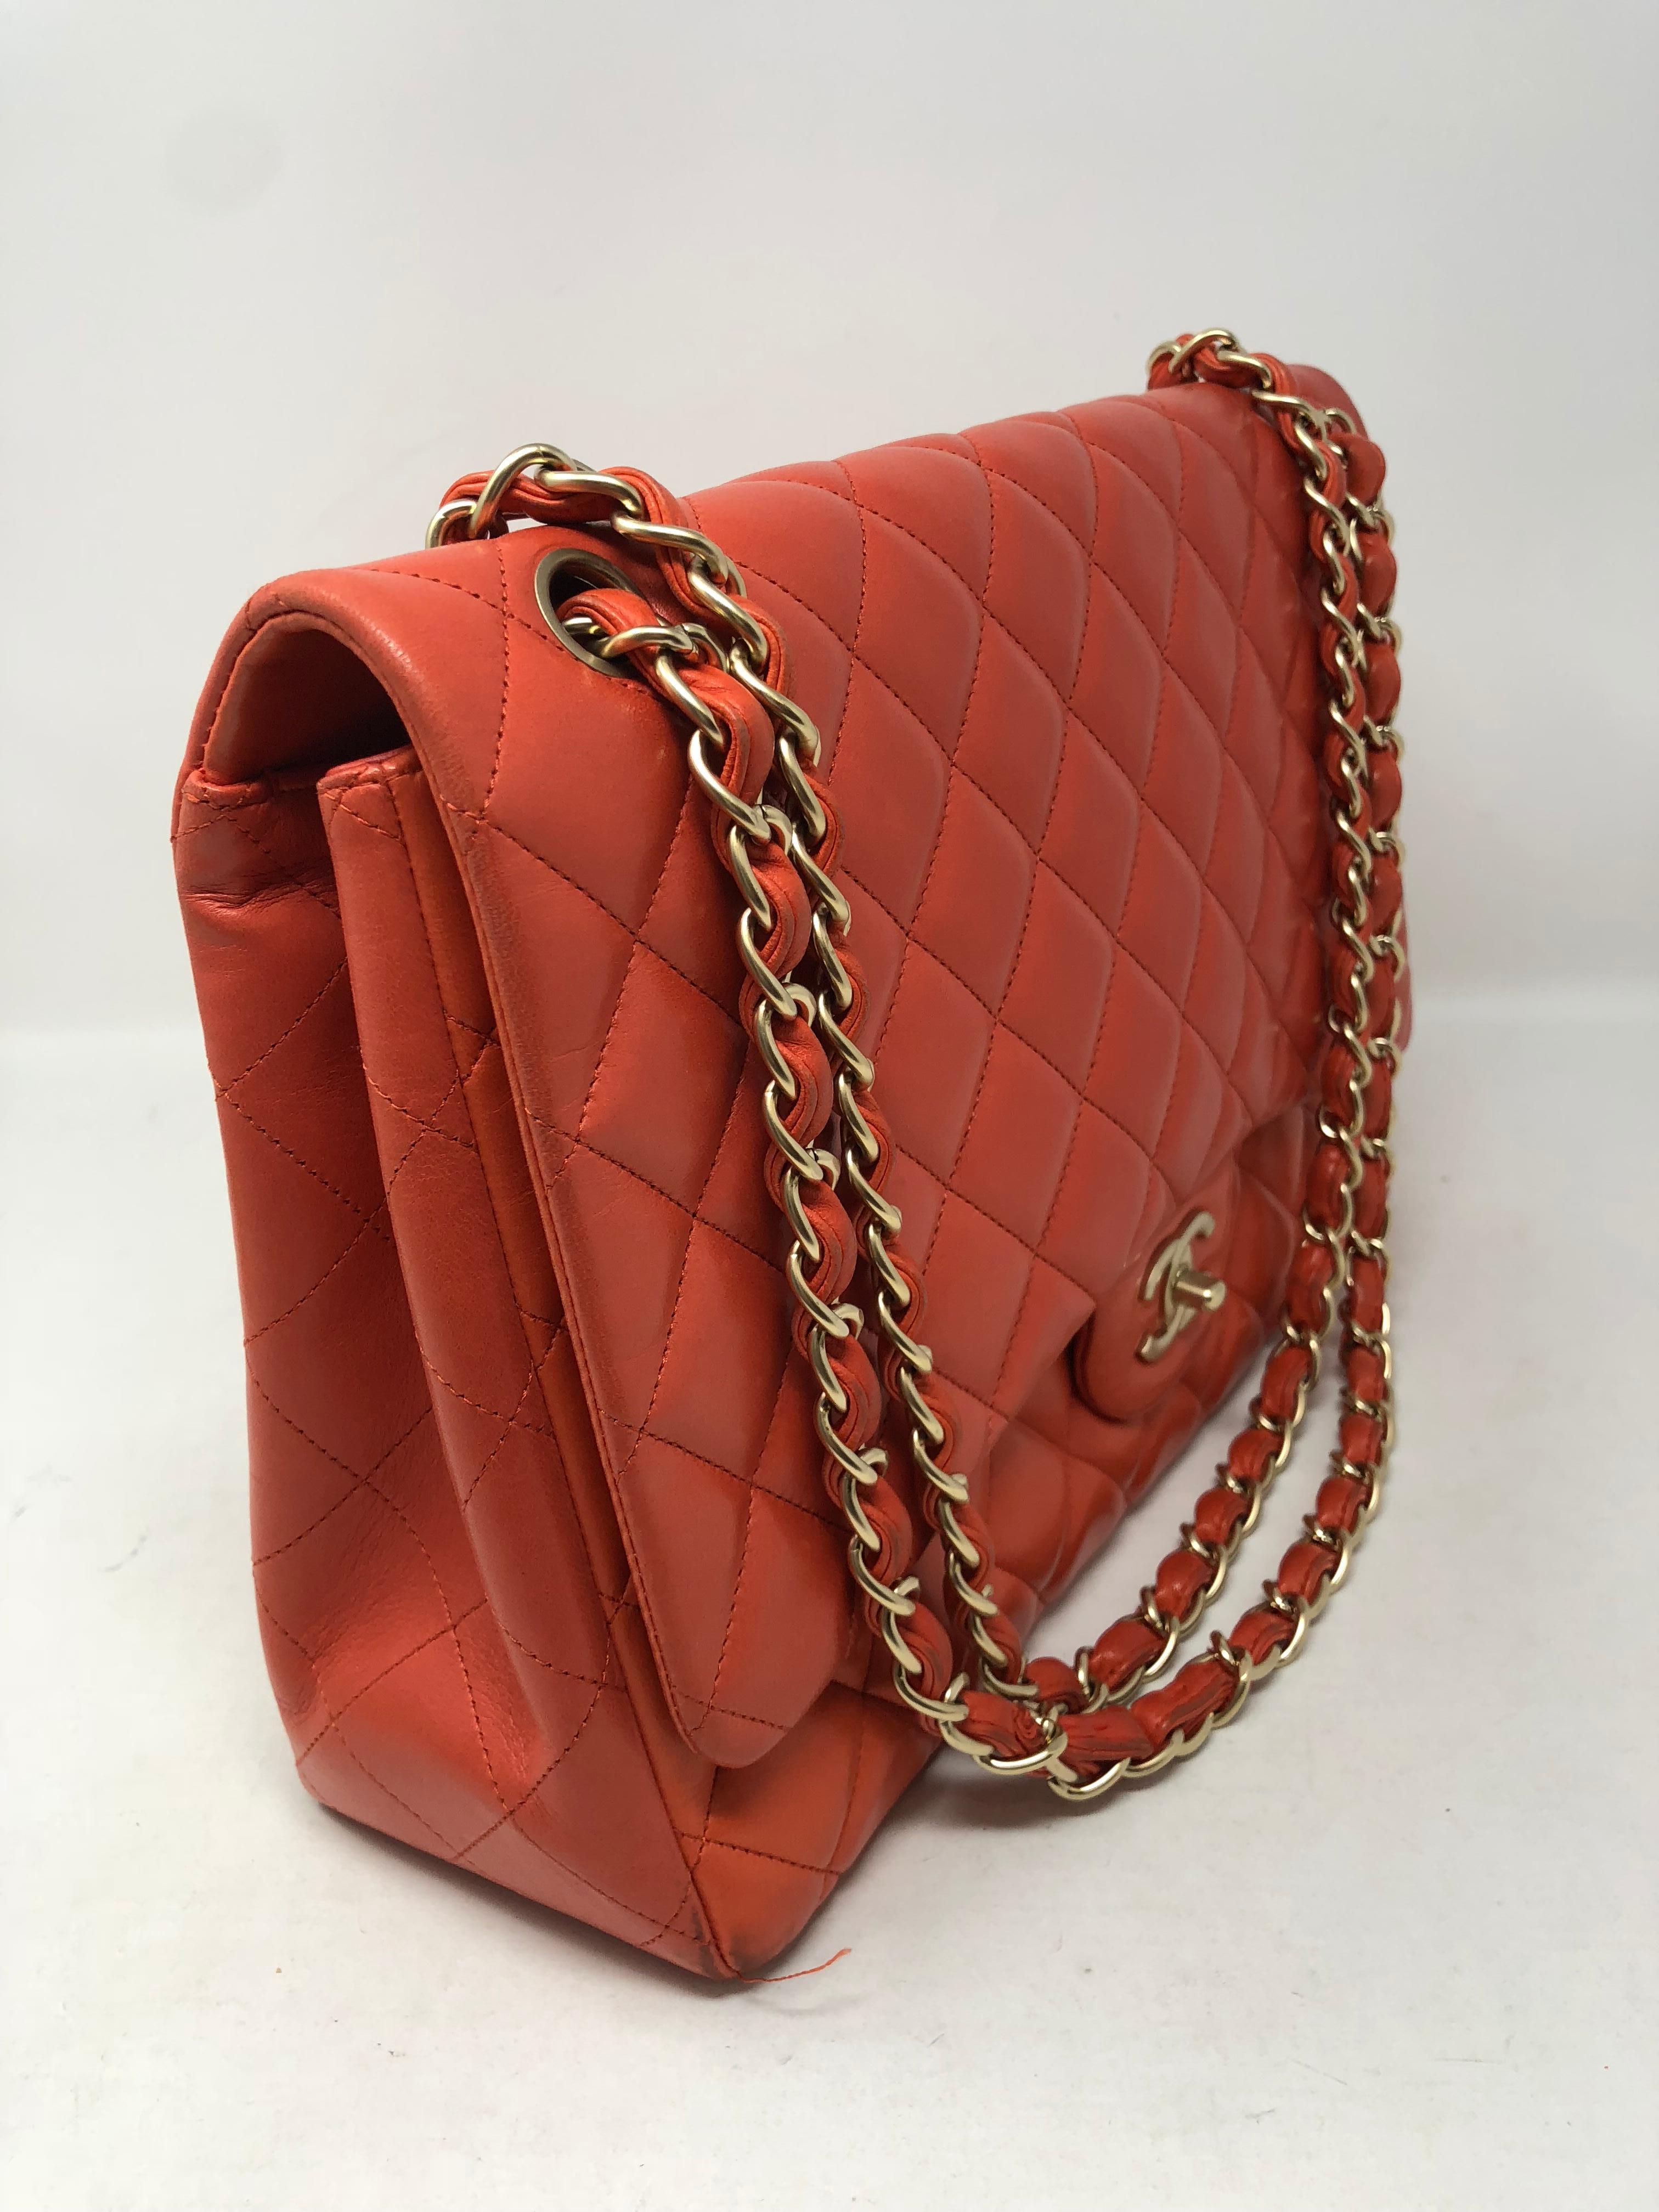 Women's or Men's Chanel Coral Maxi Bag